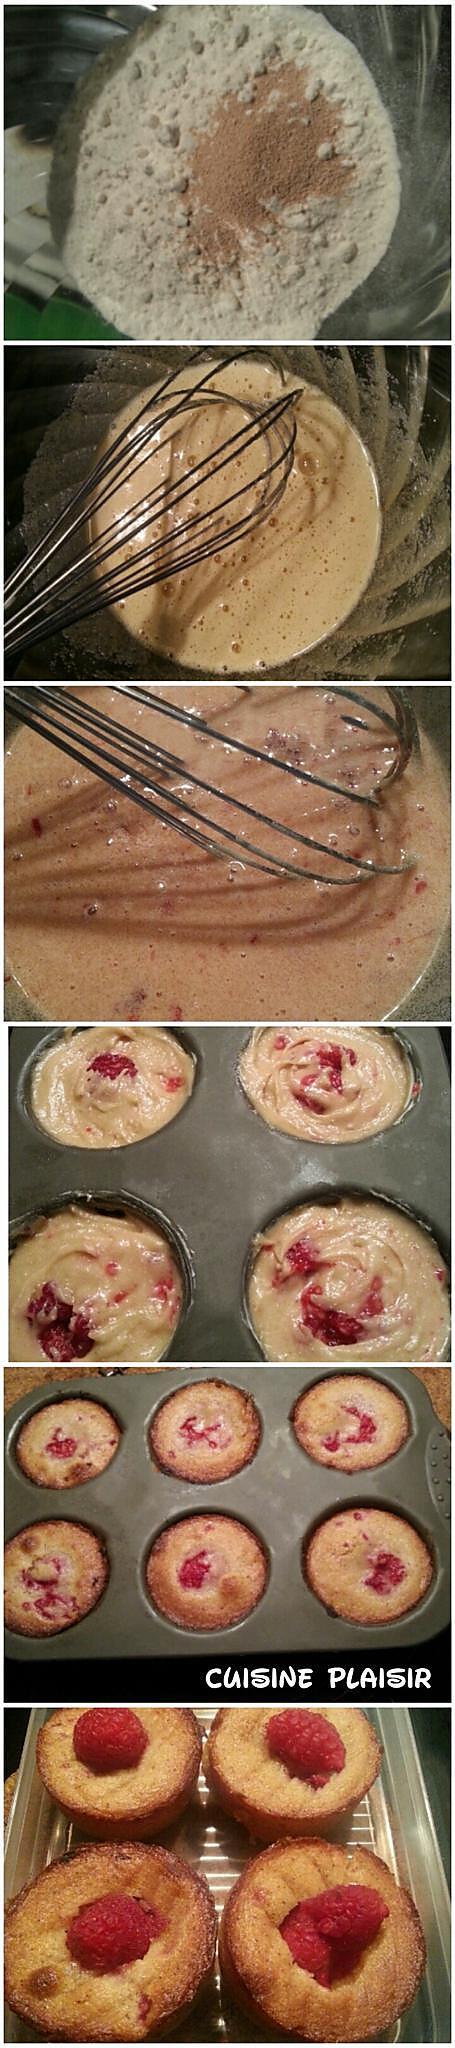 recette Muffins aux framboises